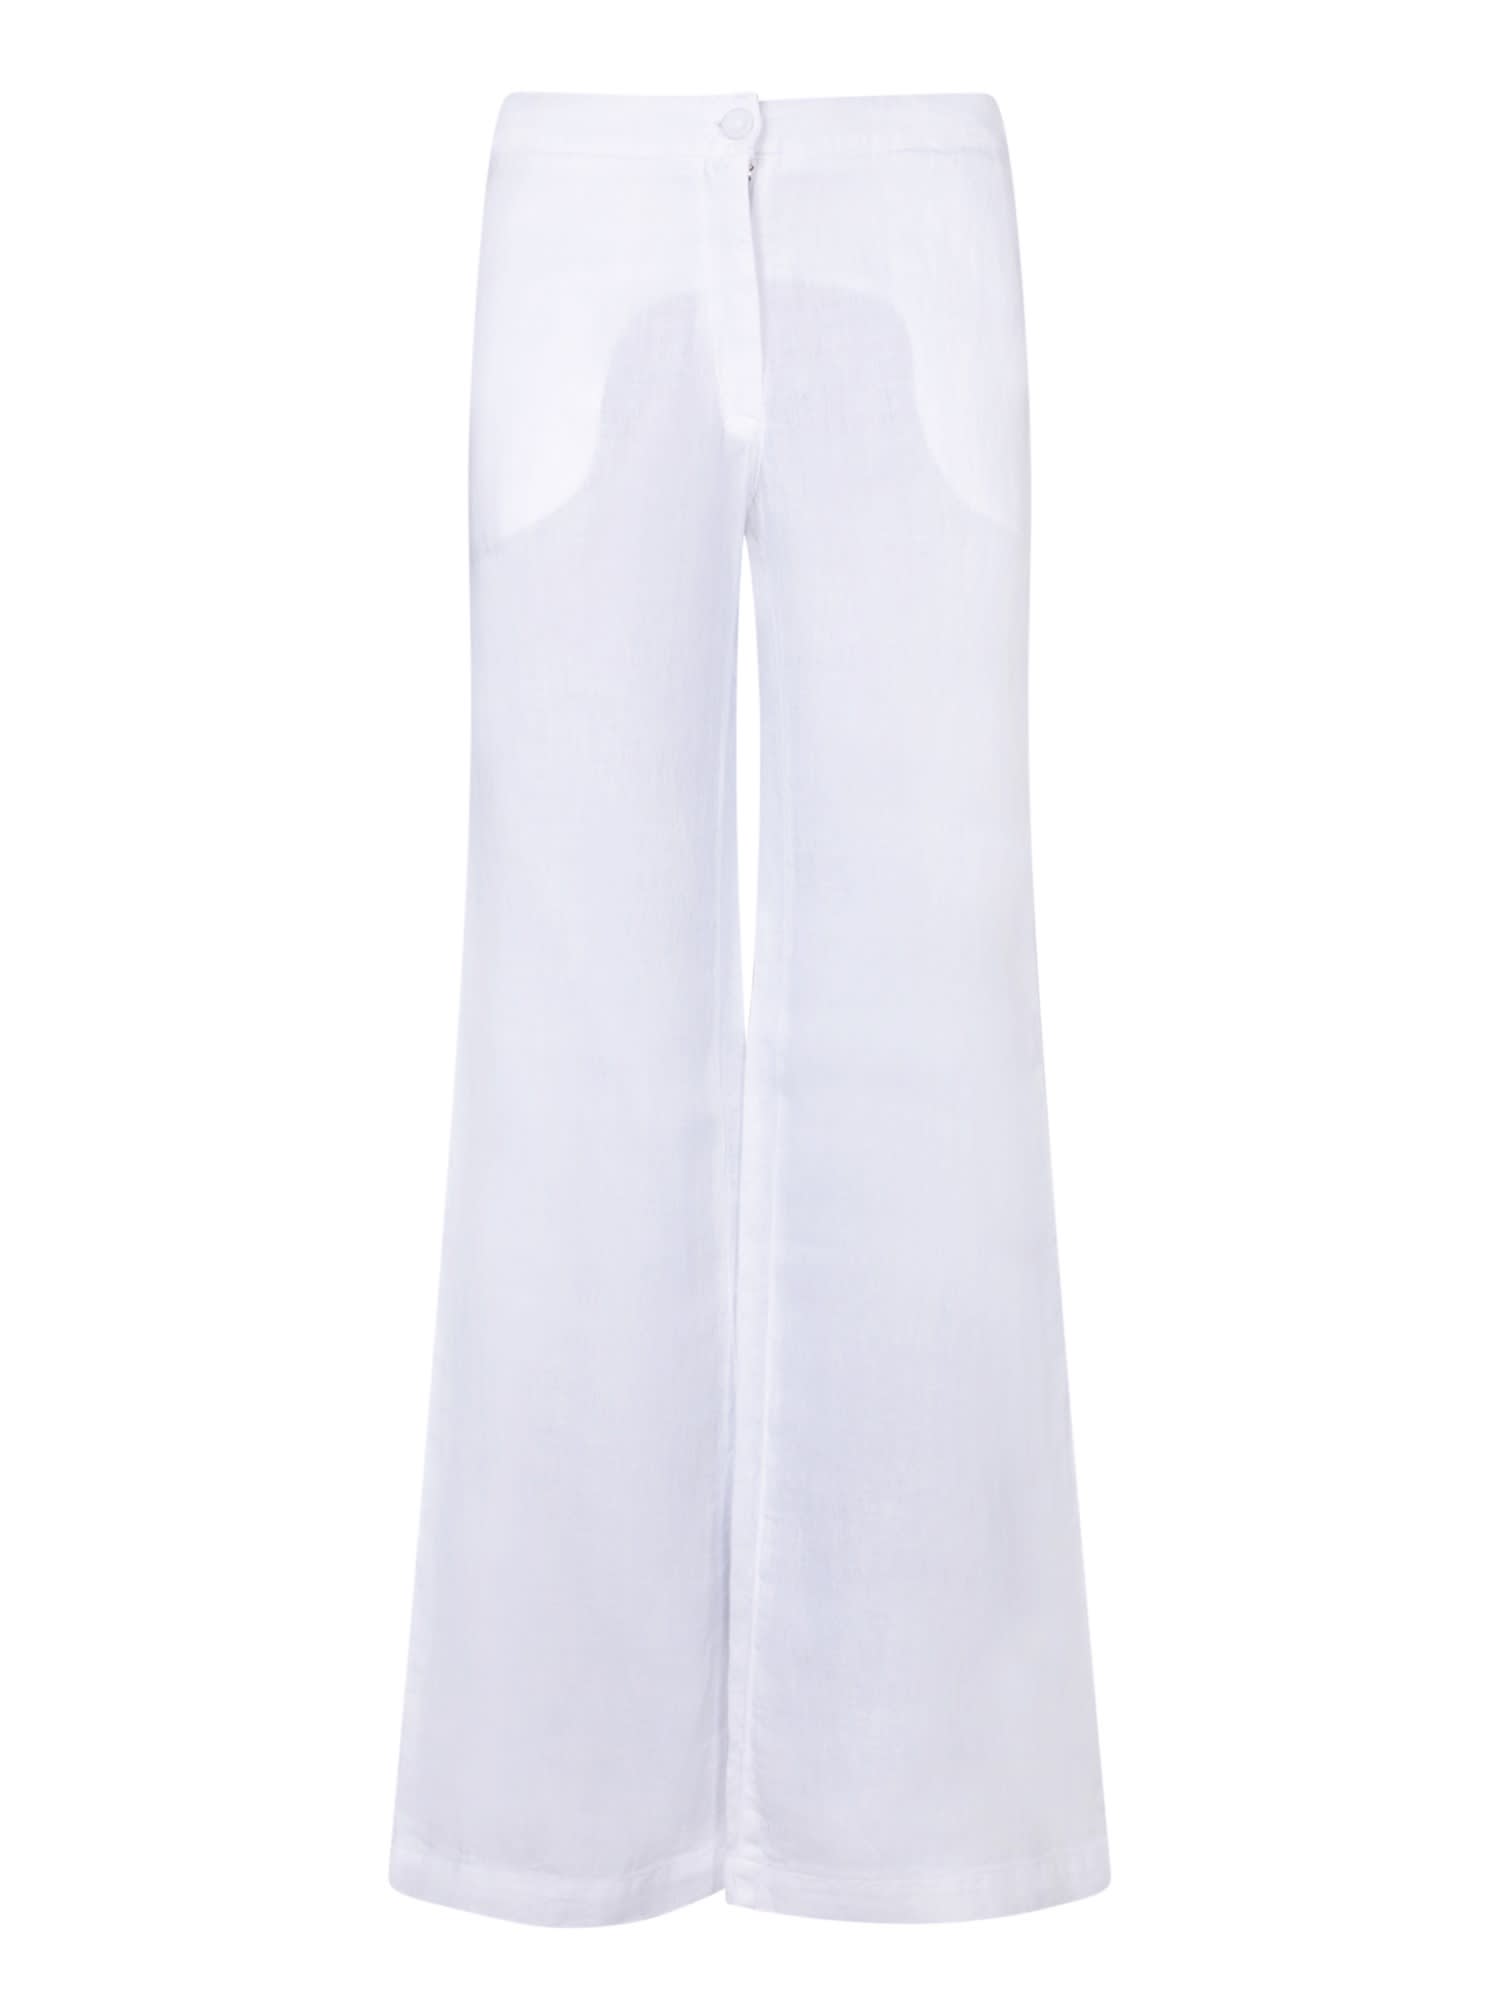 Shop 120% Lino White Smoking Trousers